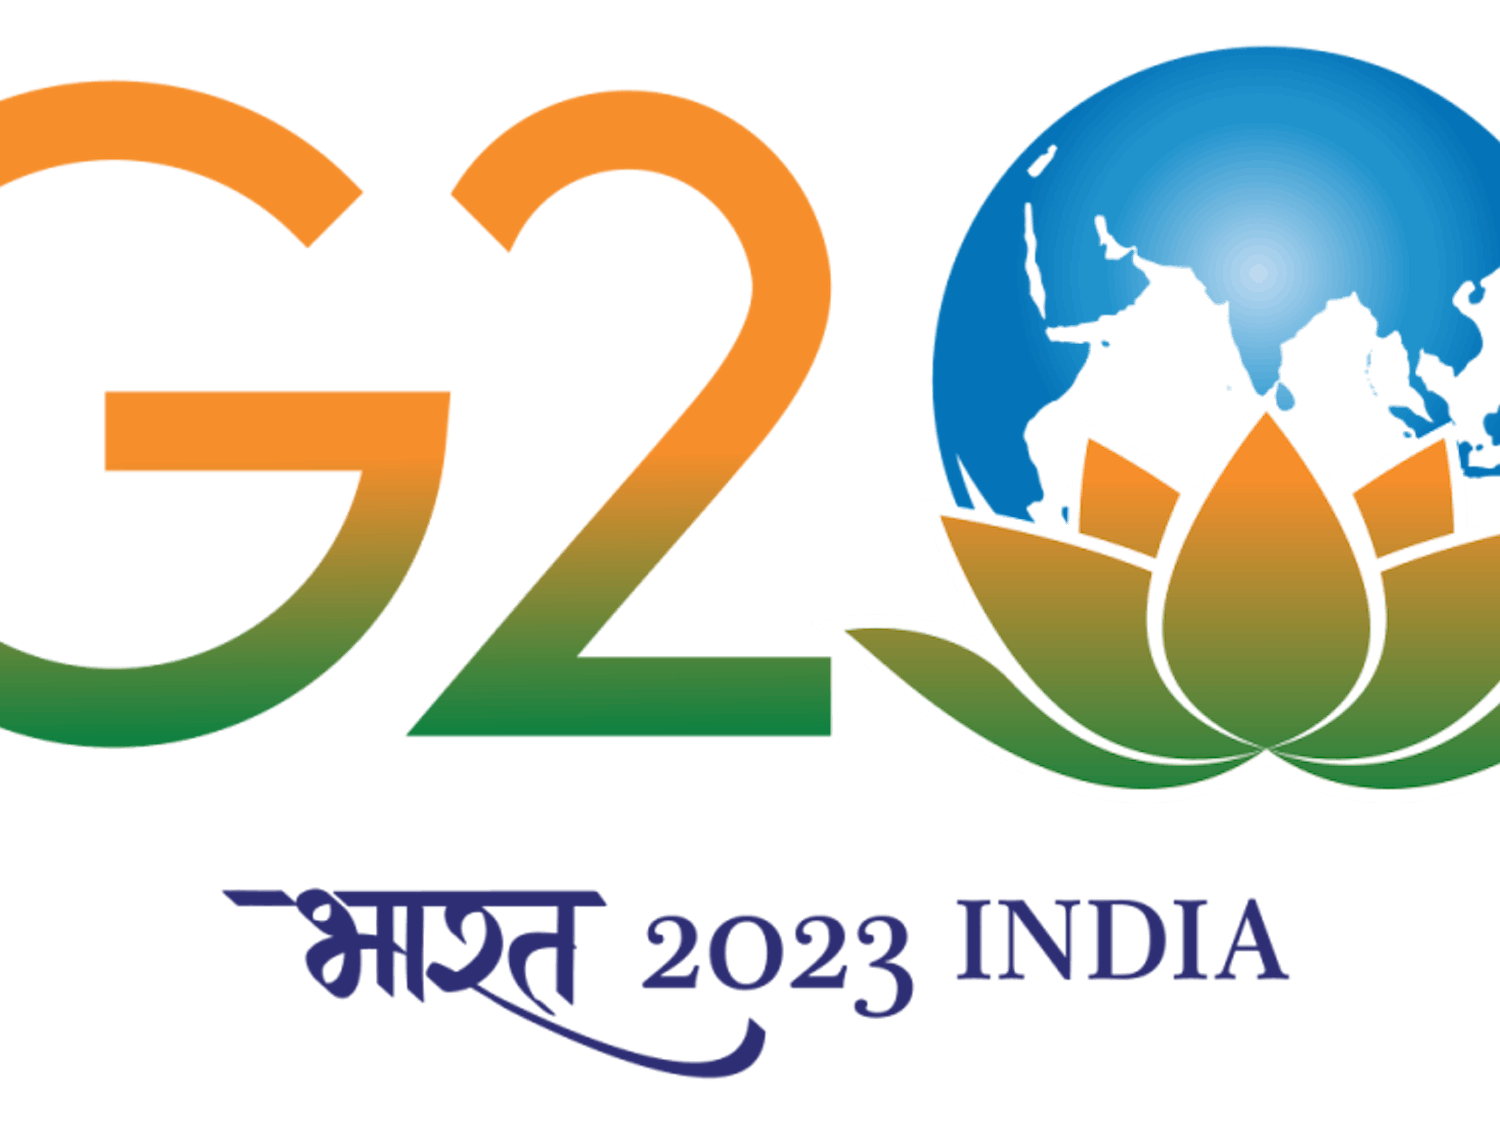 G20_India_2023_logo.svg_